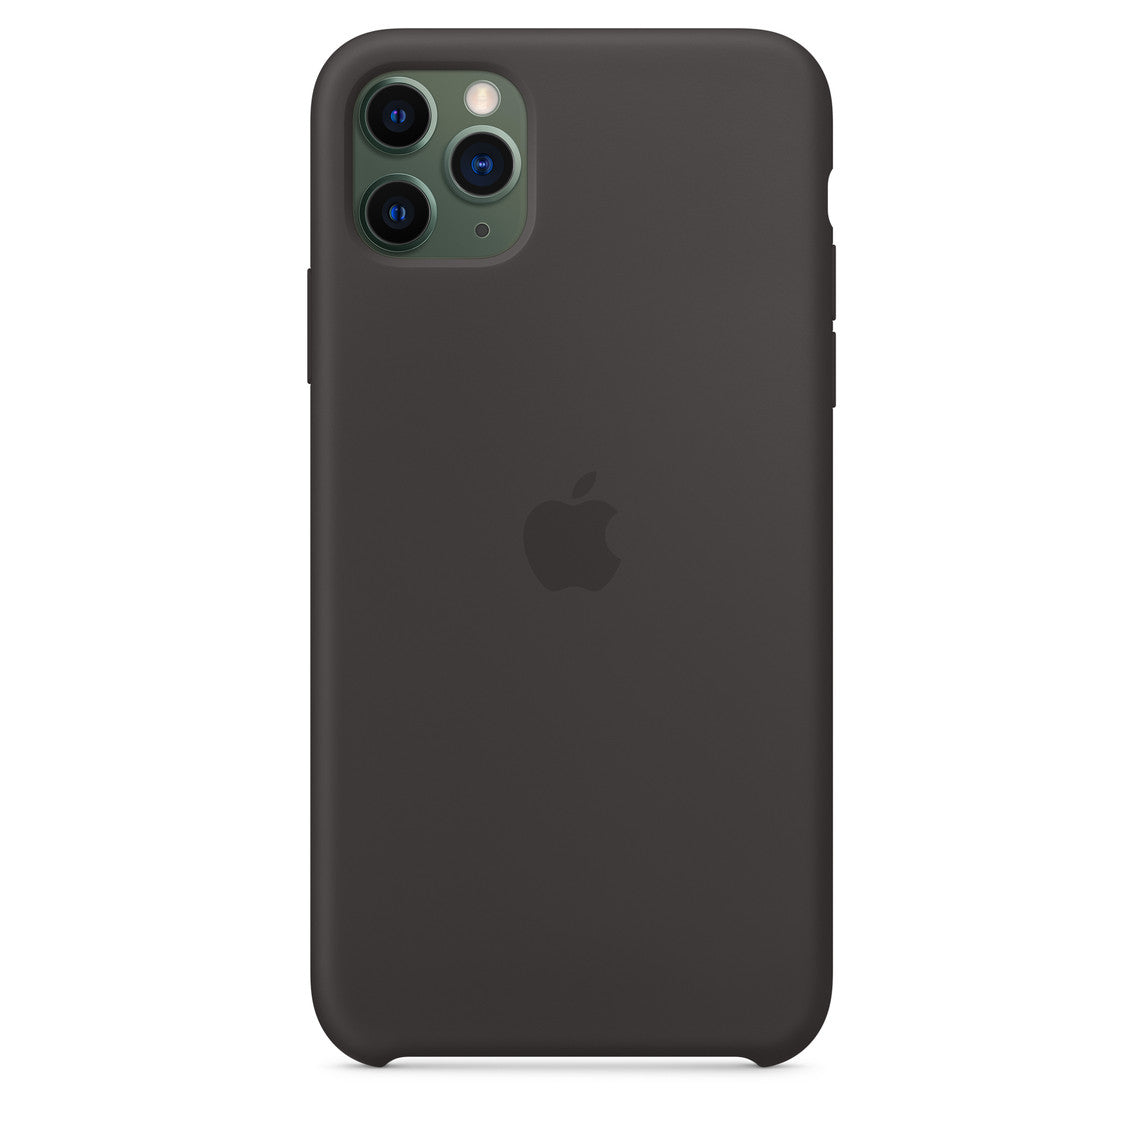 Apple iPhone 11 Pro Max 64GB Nachtgrün Gut Ohne Vertrag mit Apple iPhone 11 Pro Max Silikonhülle – Schwarz